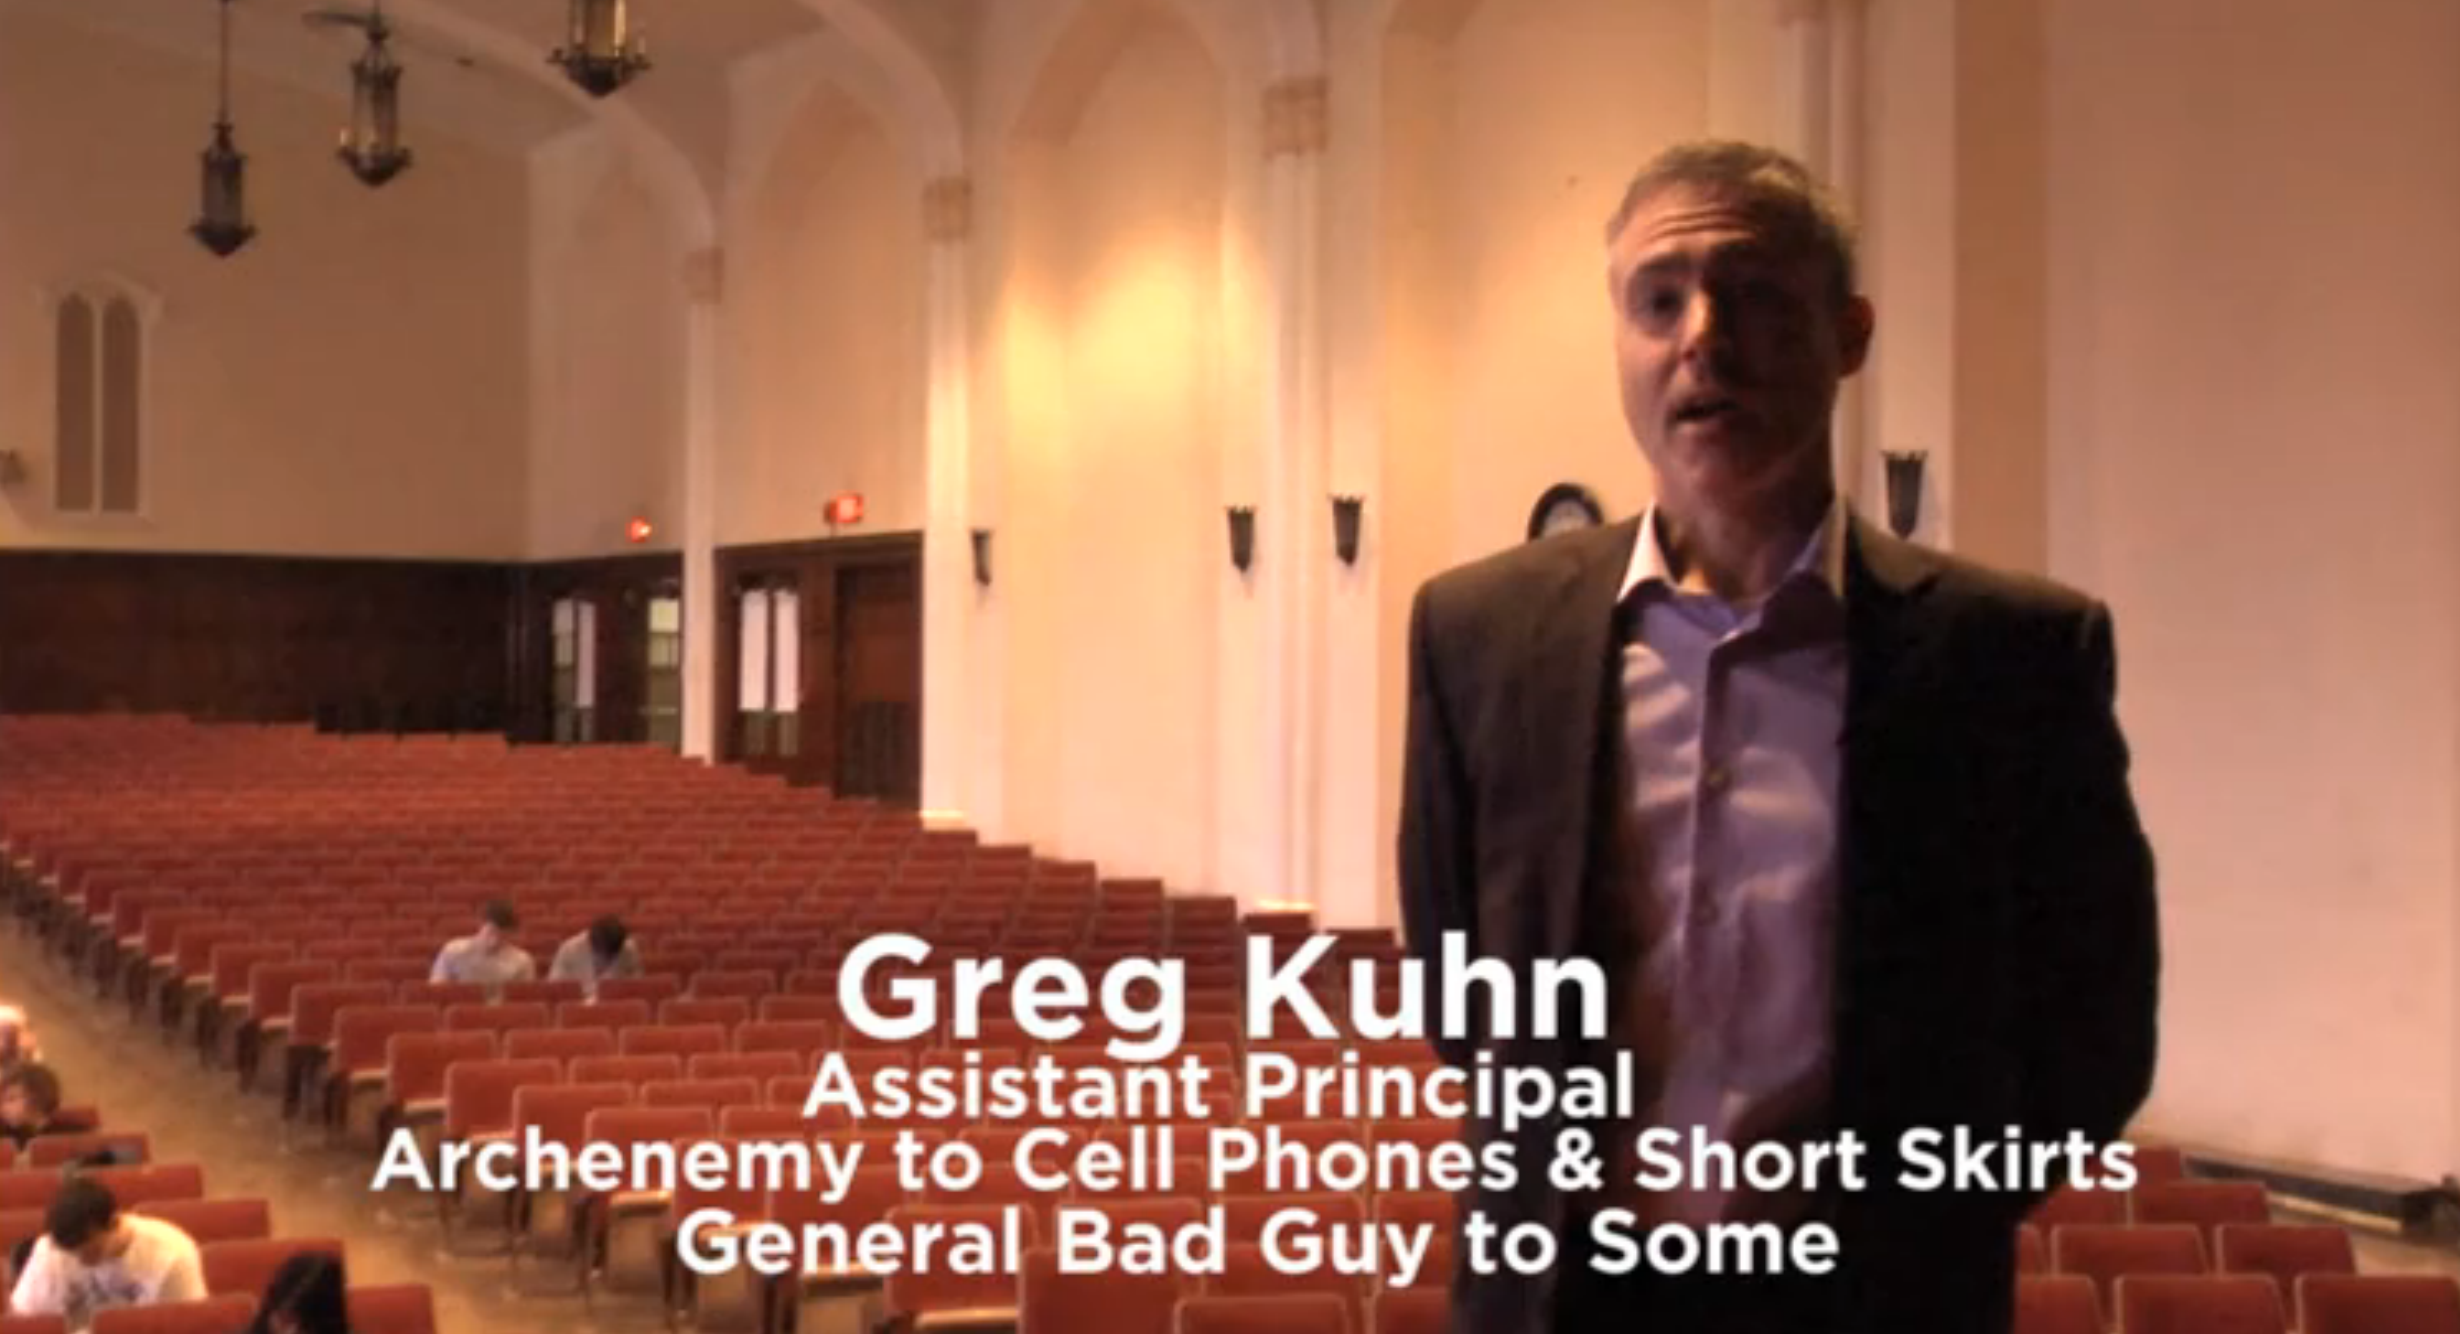 VIDEO: Kuhns Proposal